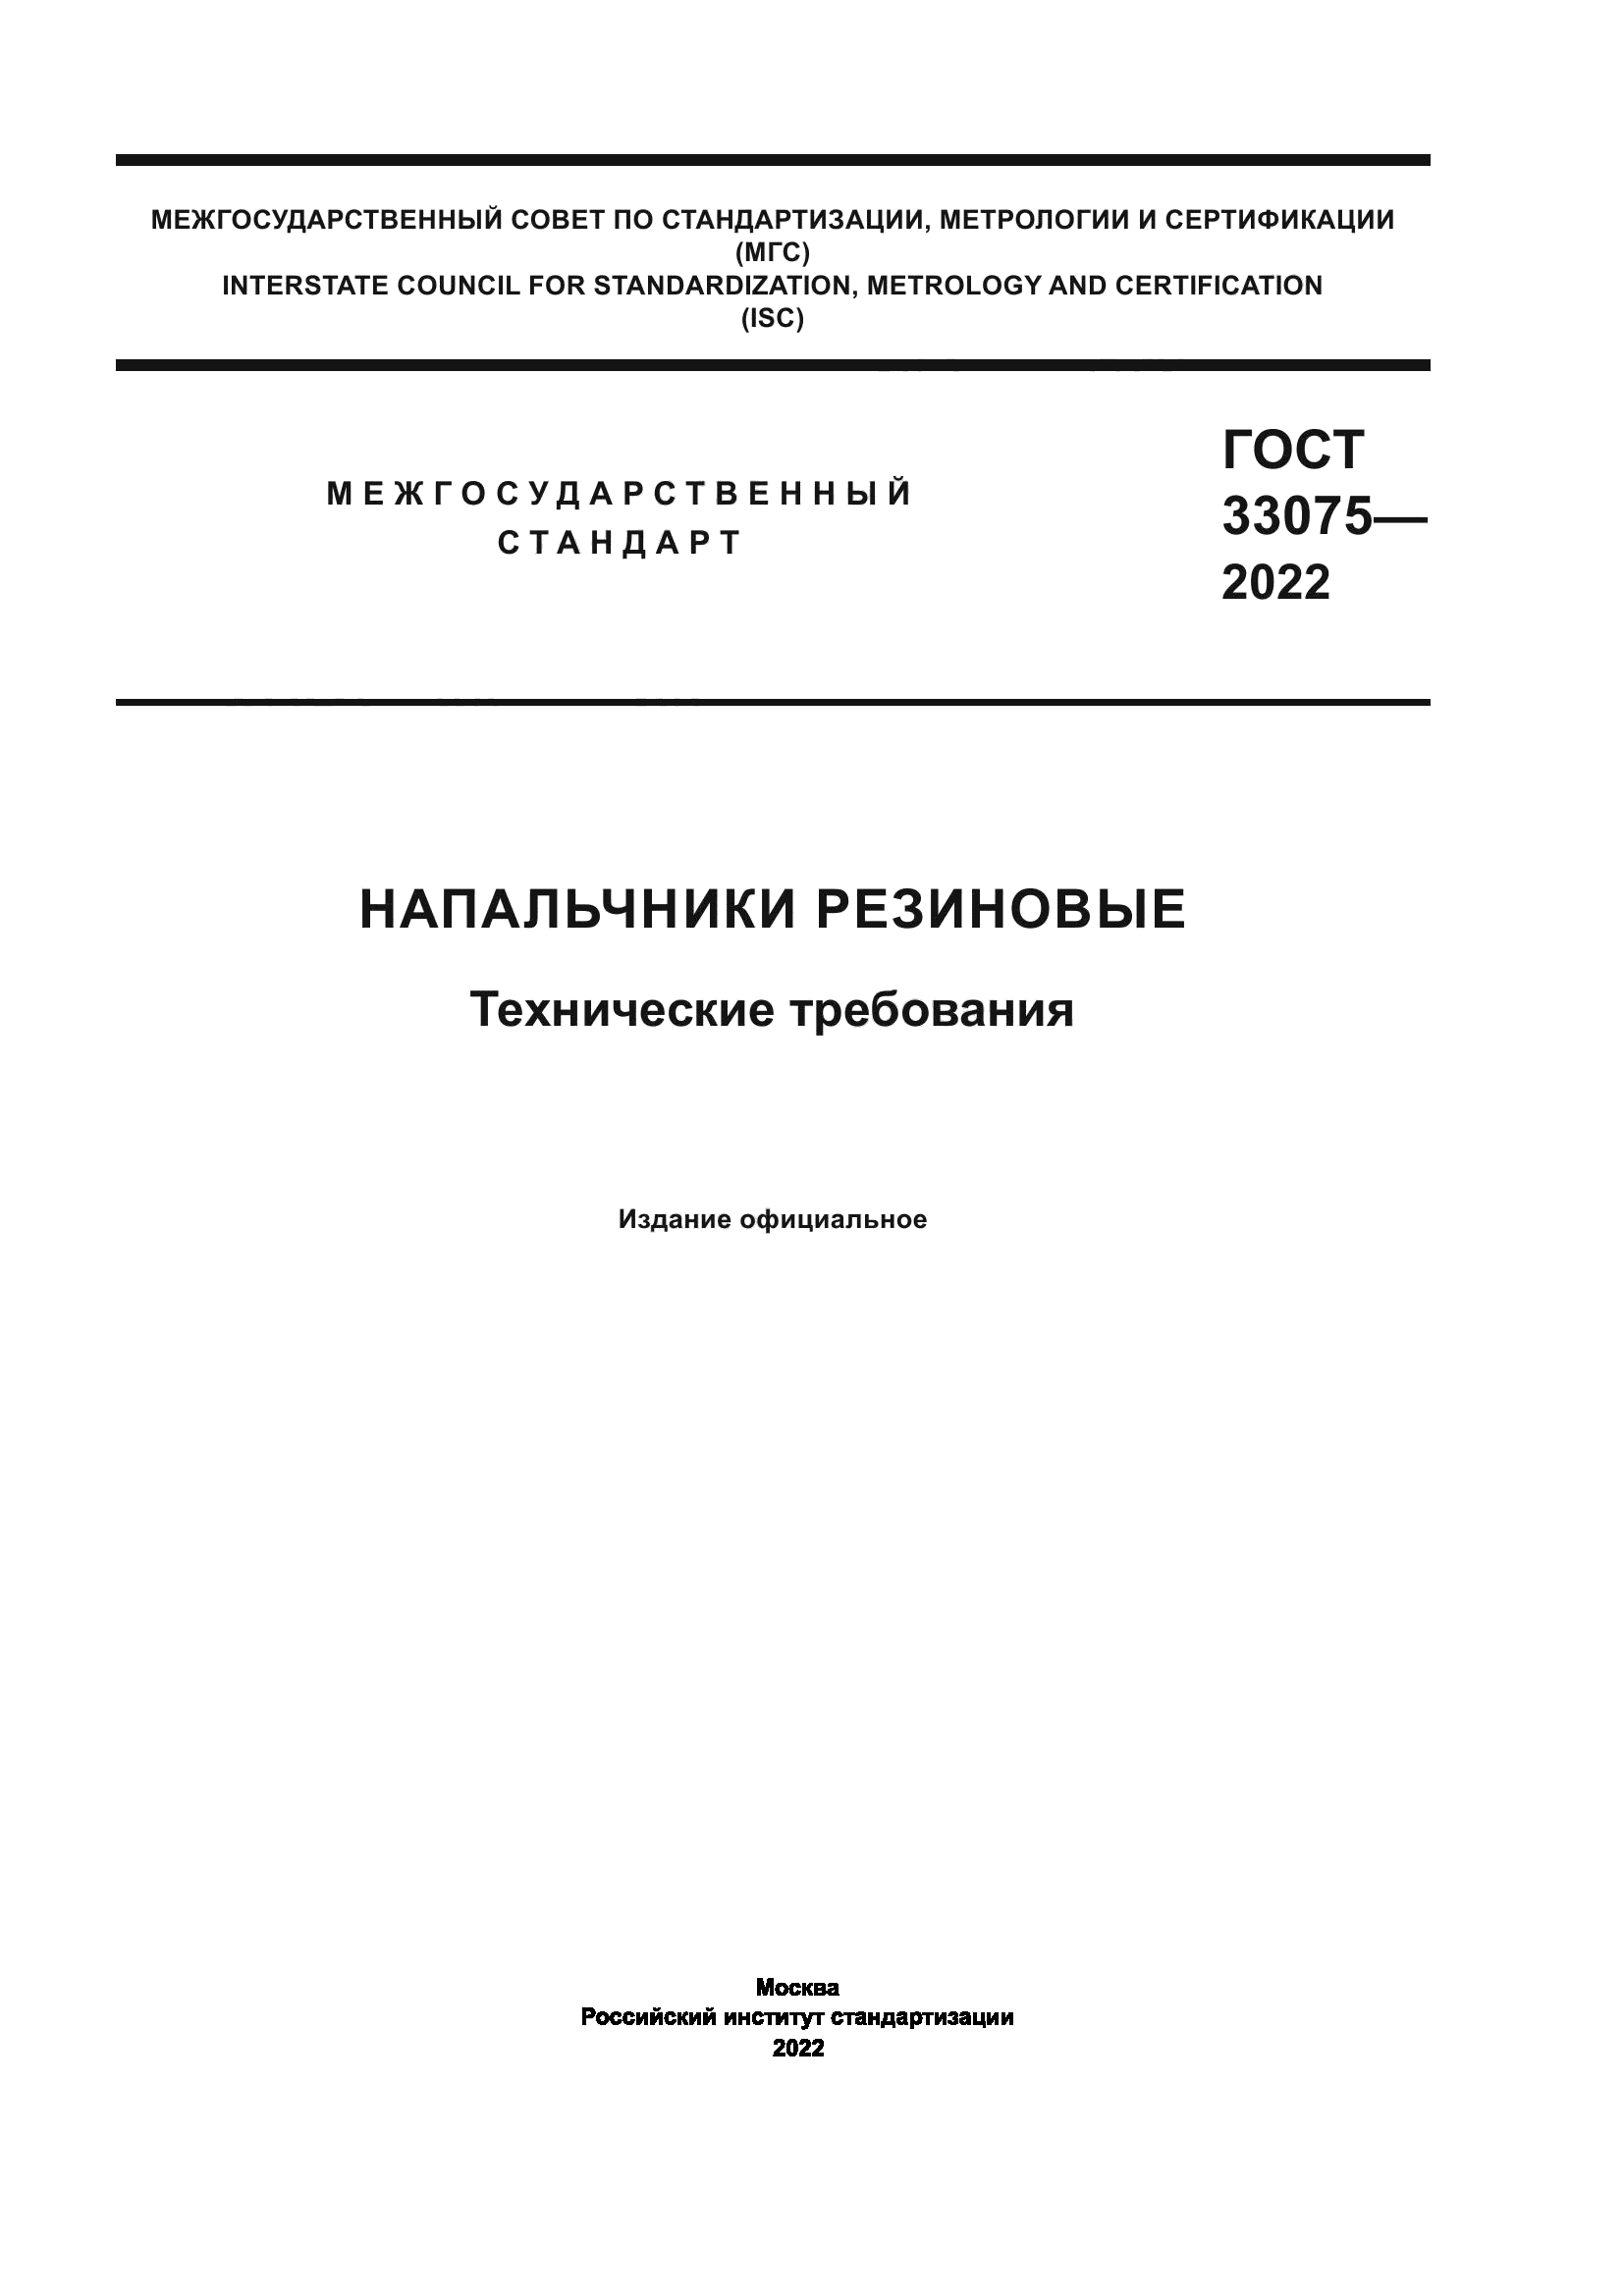 ГОСТ 33075-2022